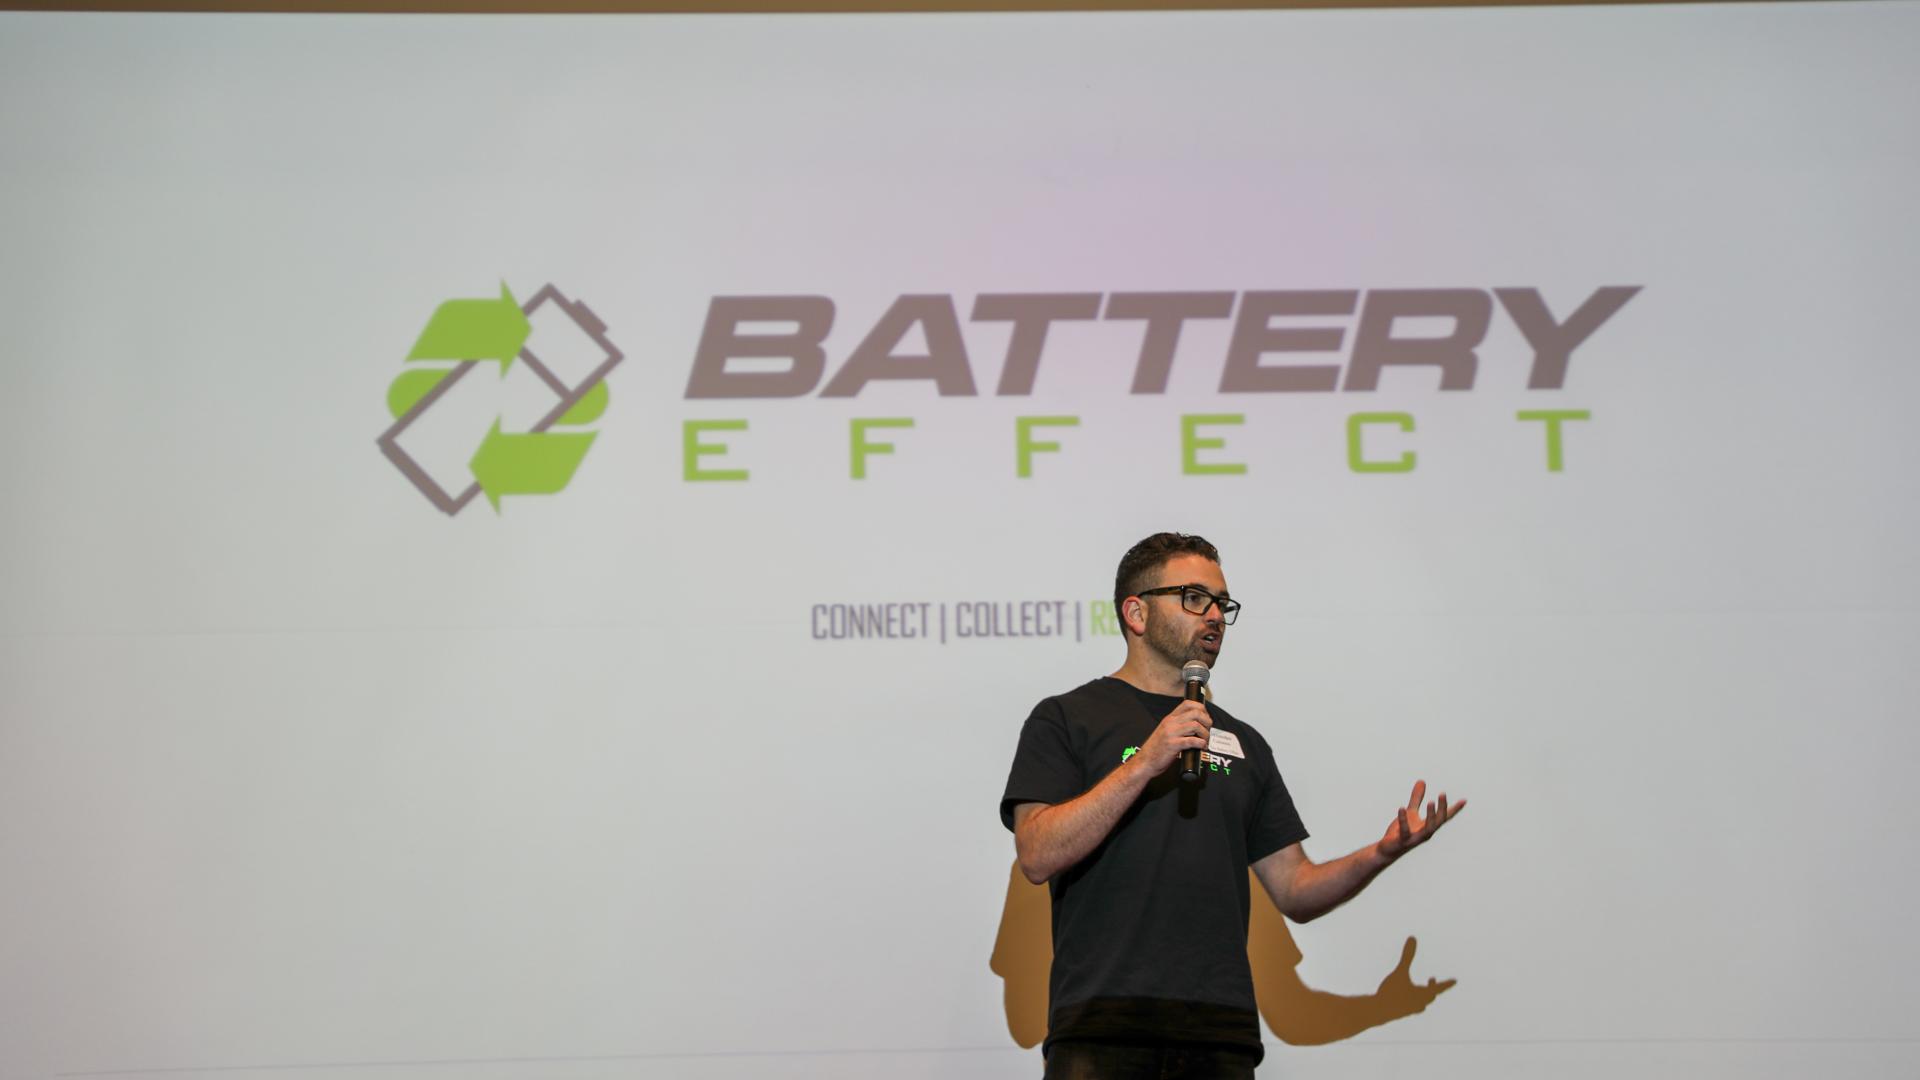 CSULB Innovation Challenge Award Ceremony - Battery Effect